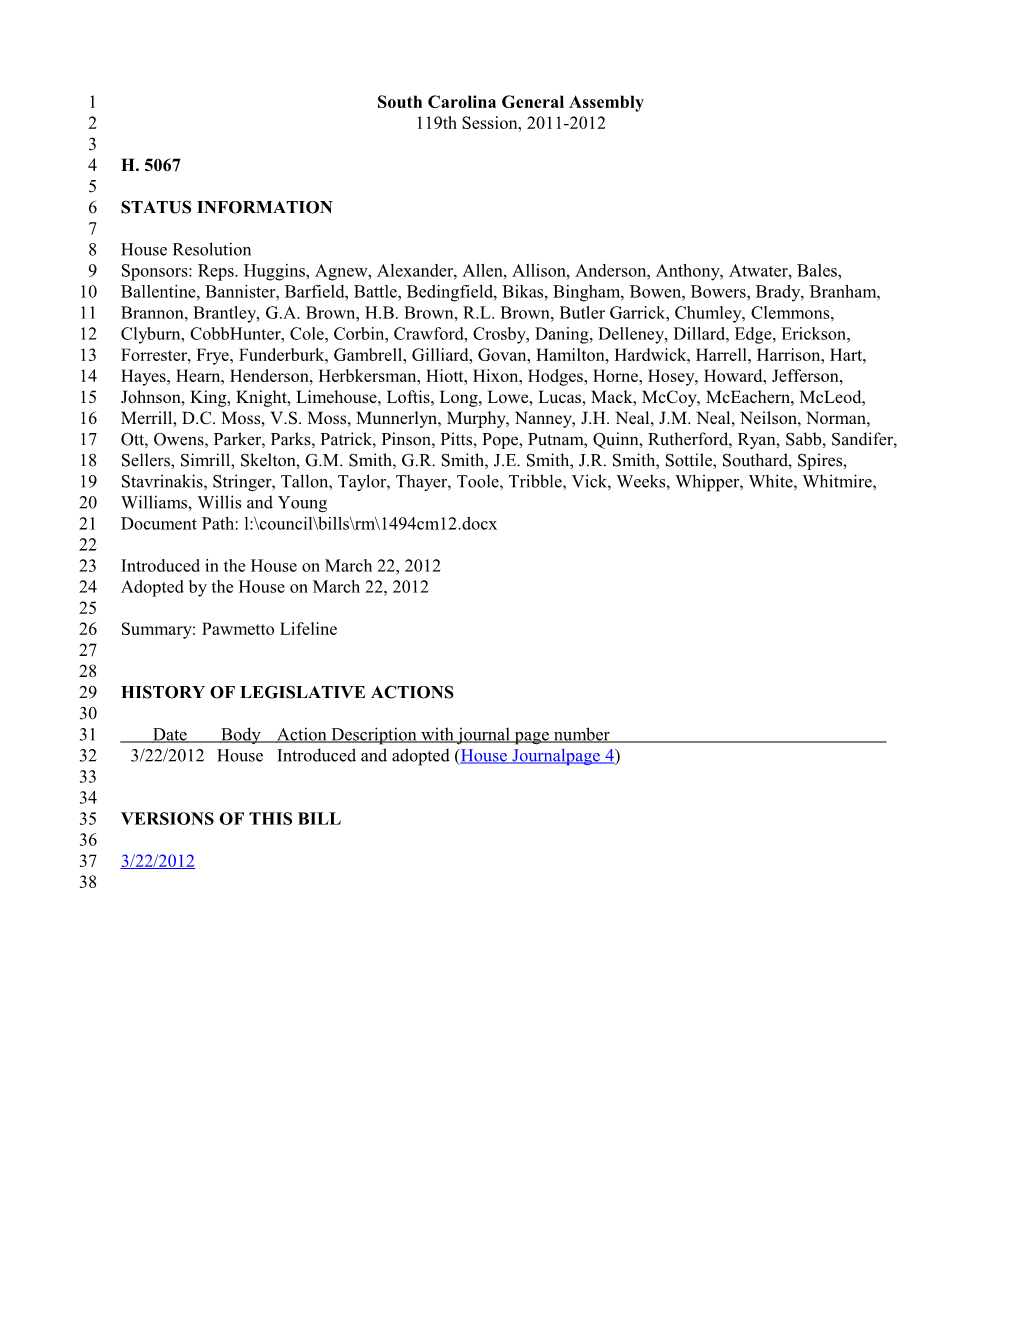 2011-2012 Bill 5067: Pawmetto Lifeline - South Carolina Legislature Online